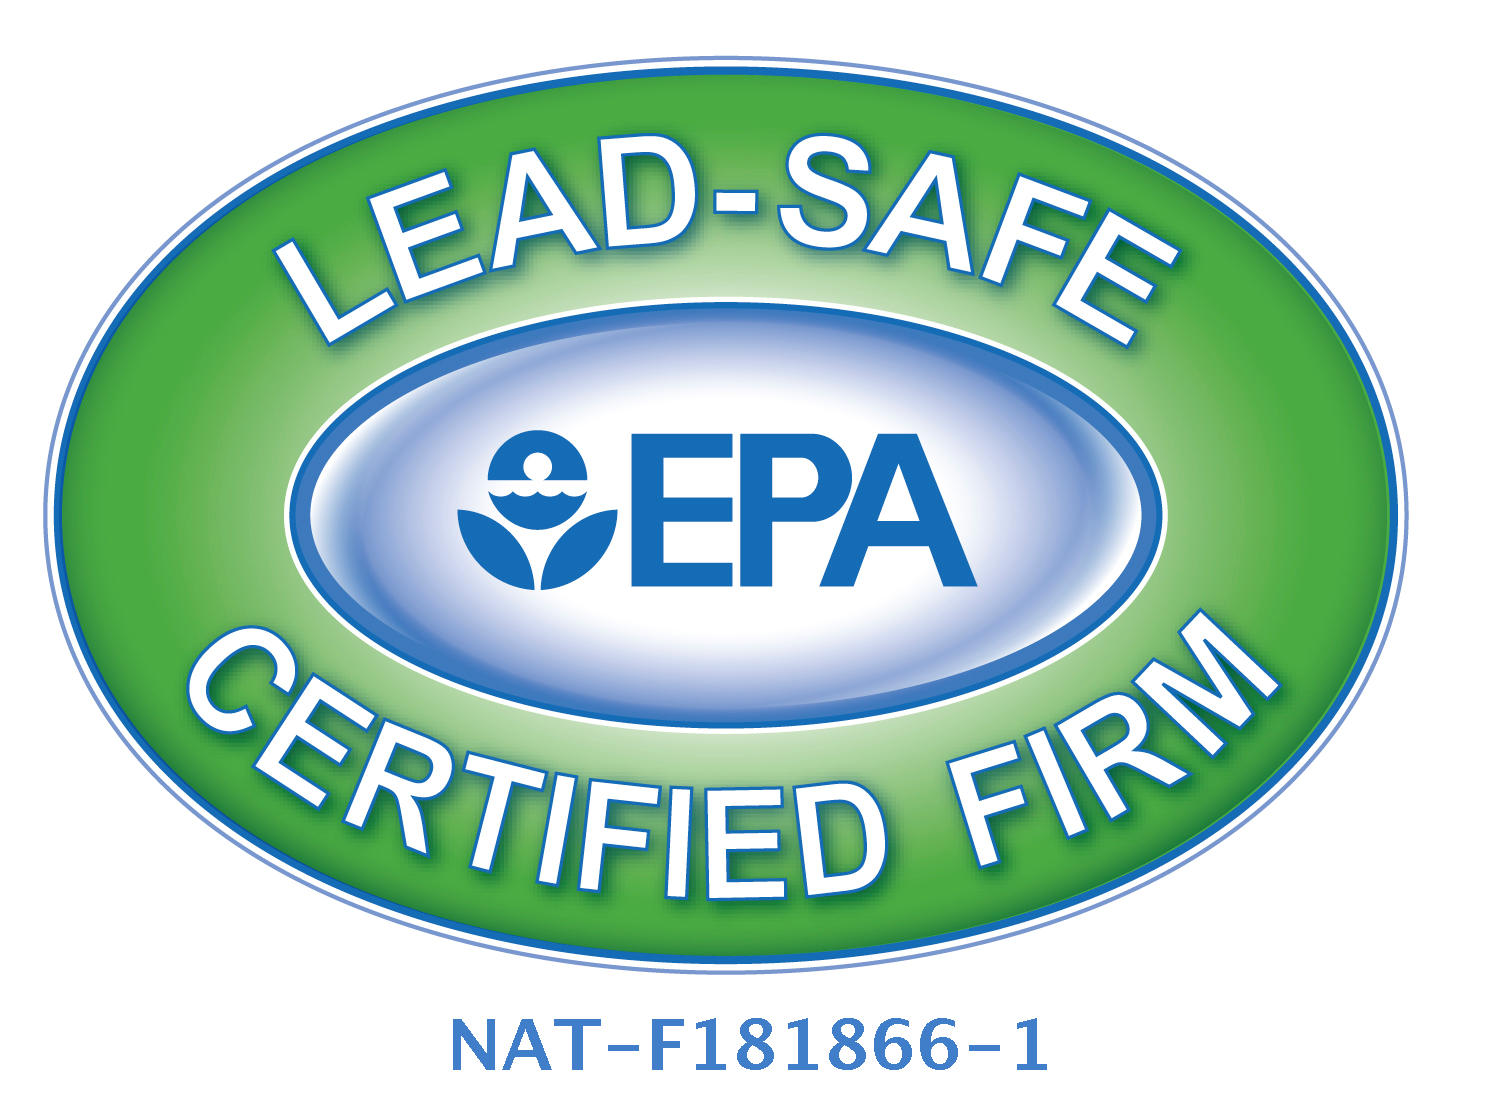 EPA_Leadsafe_Logo_NAT-F181866-1.jpg